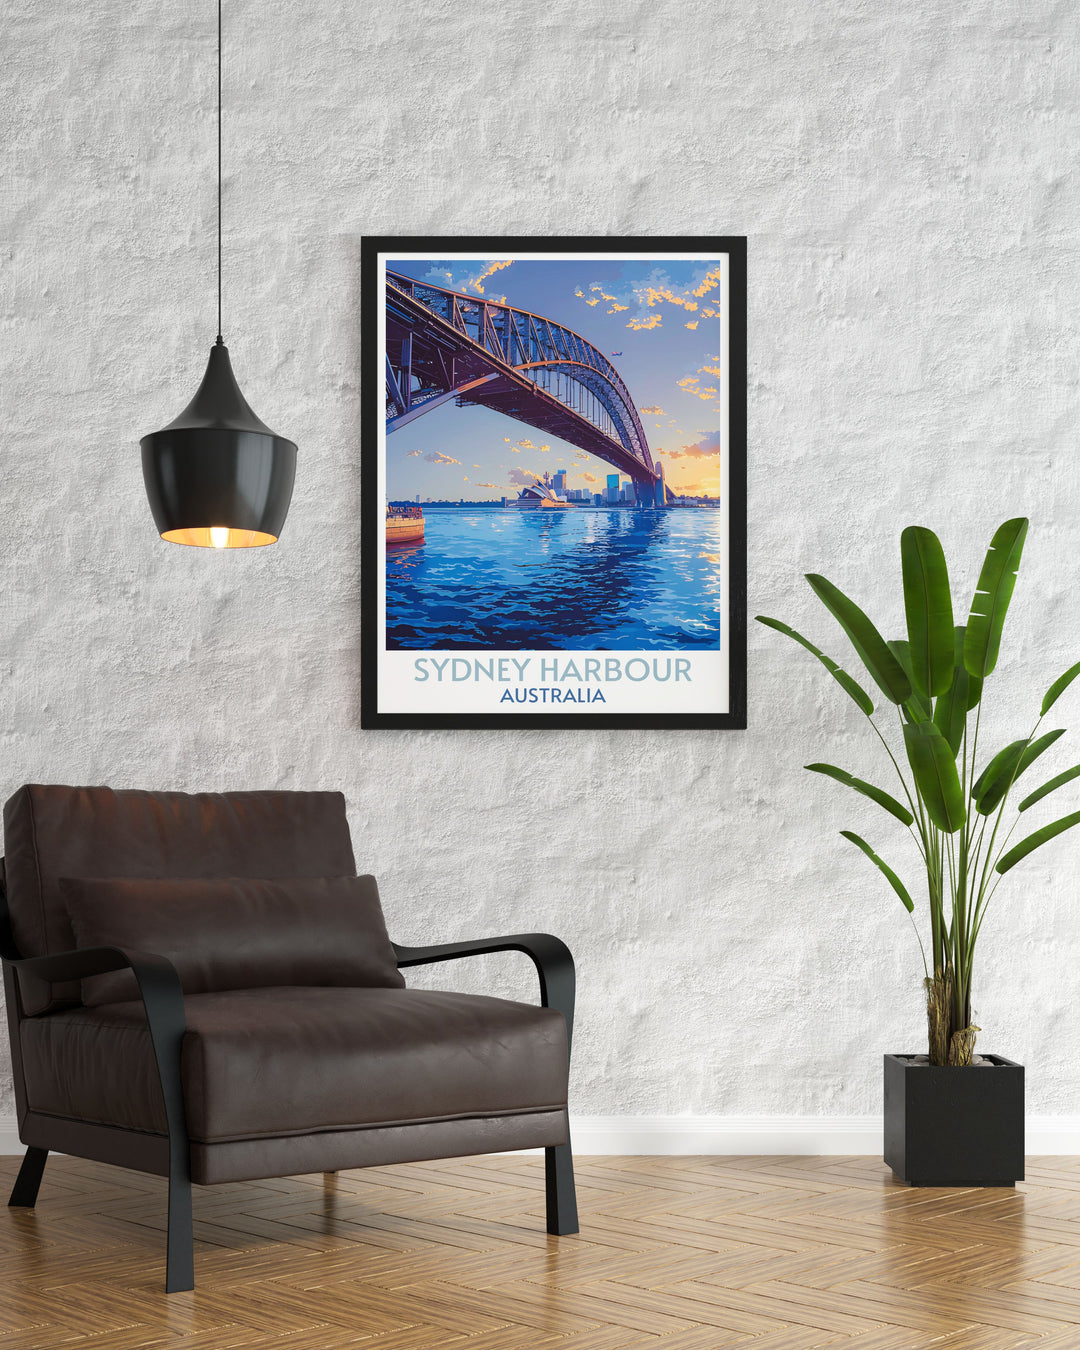 Framed print of Sydneys skyline, showcasing the bustling city life and urban charm.